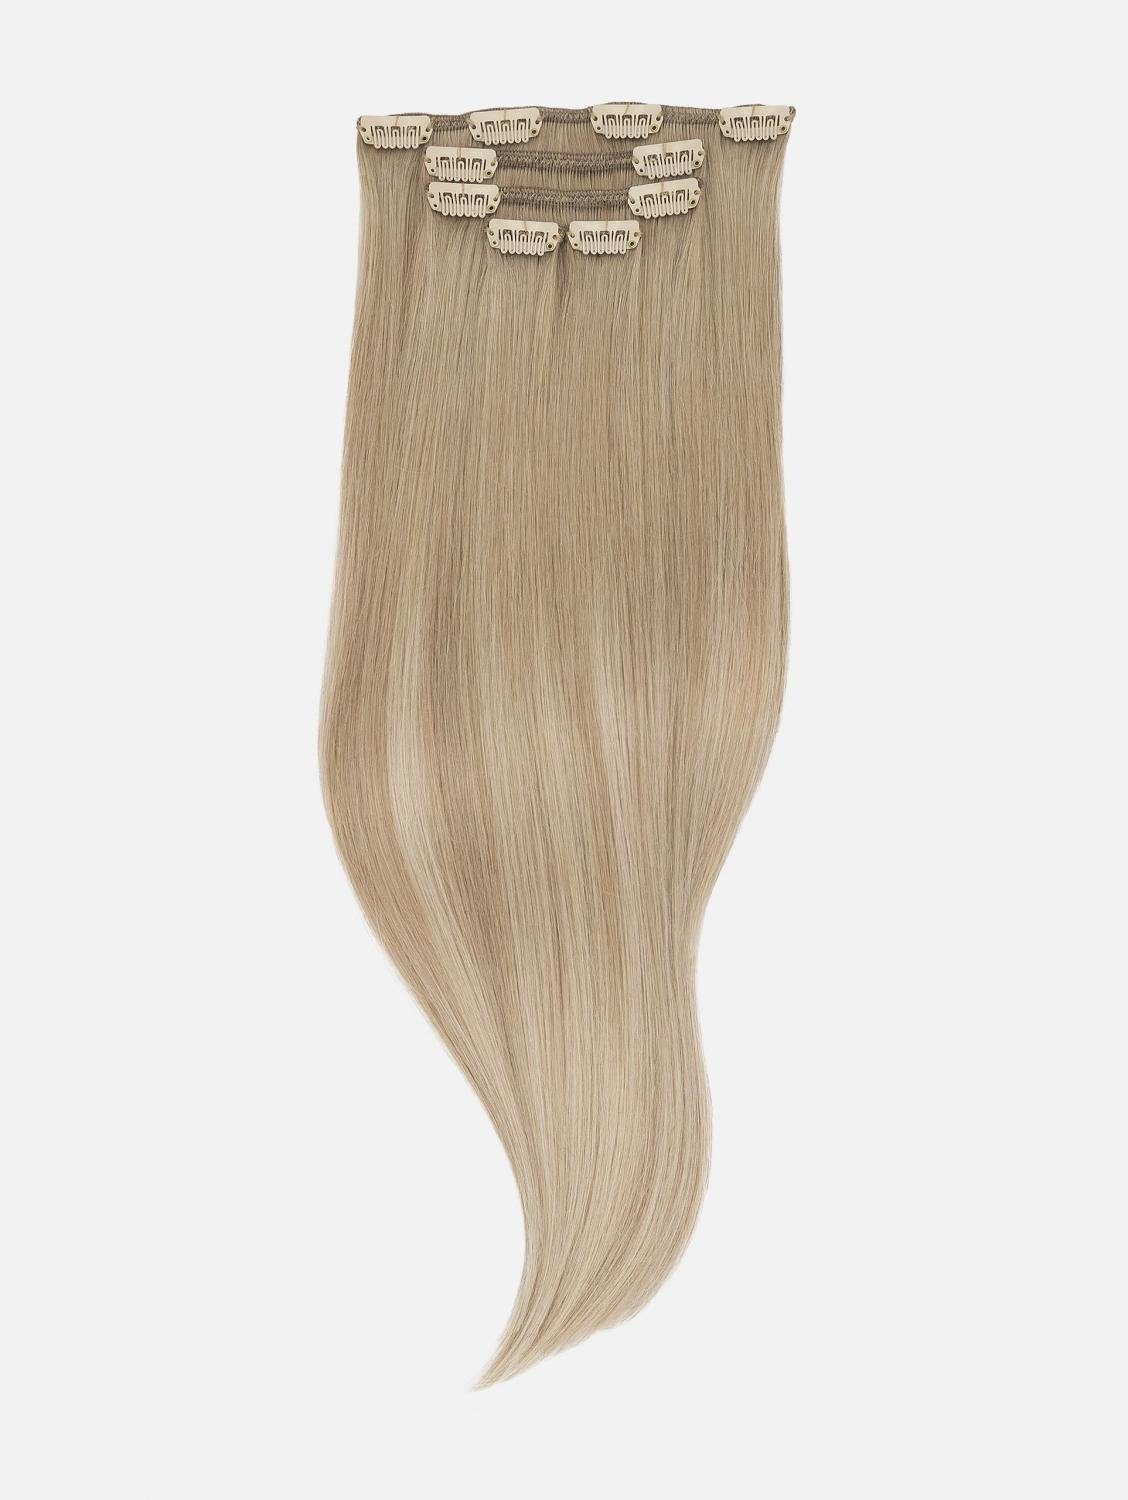 Echthaar Balayage EH (Sandy Ash Clip-In 50cm, Haarverlängerung 5-teilig - Balayage) - Extensions Blonde NATURAL Echthaar-Extension #B20/60S Echthaar